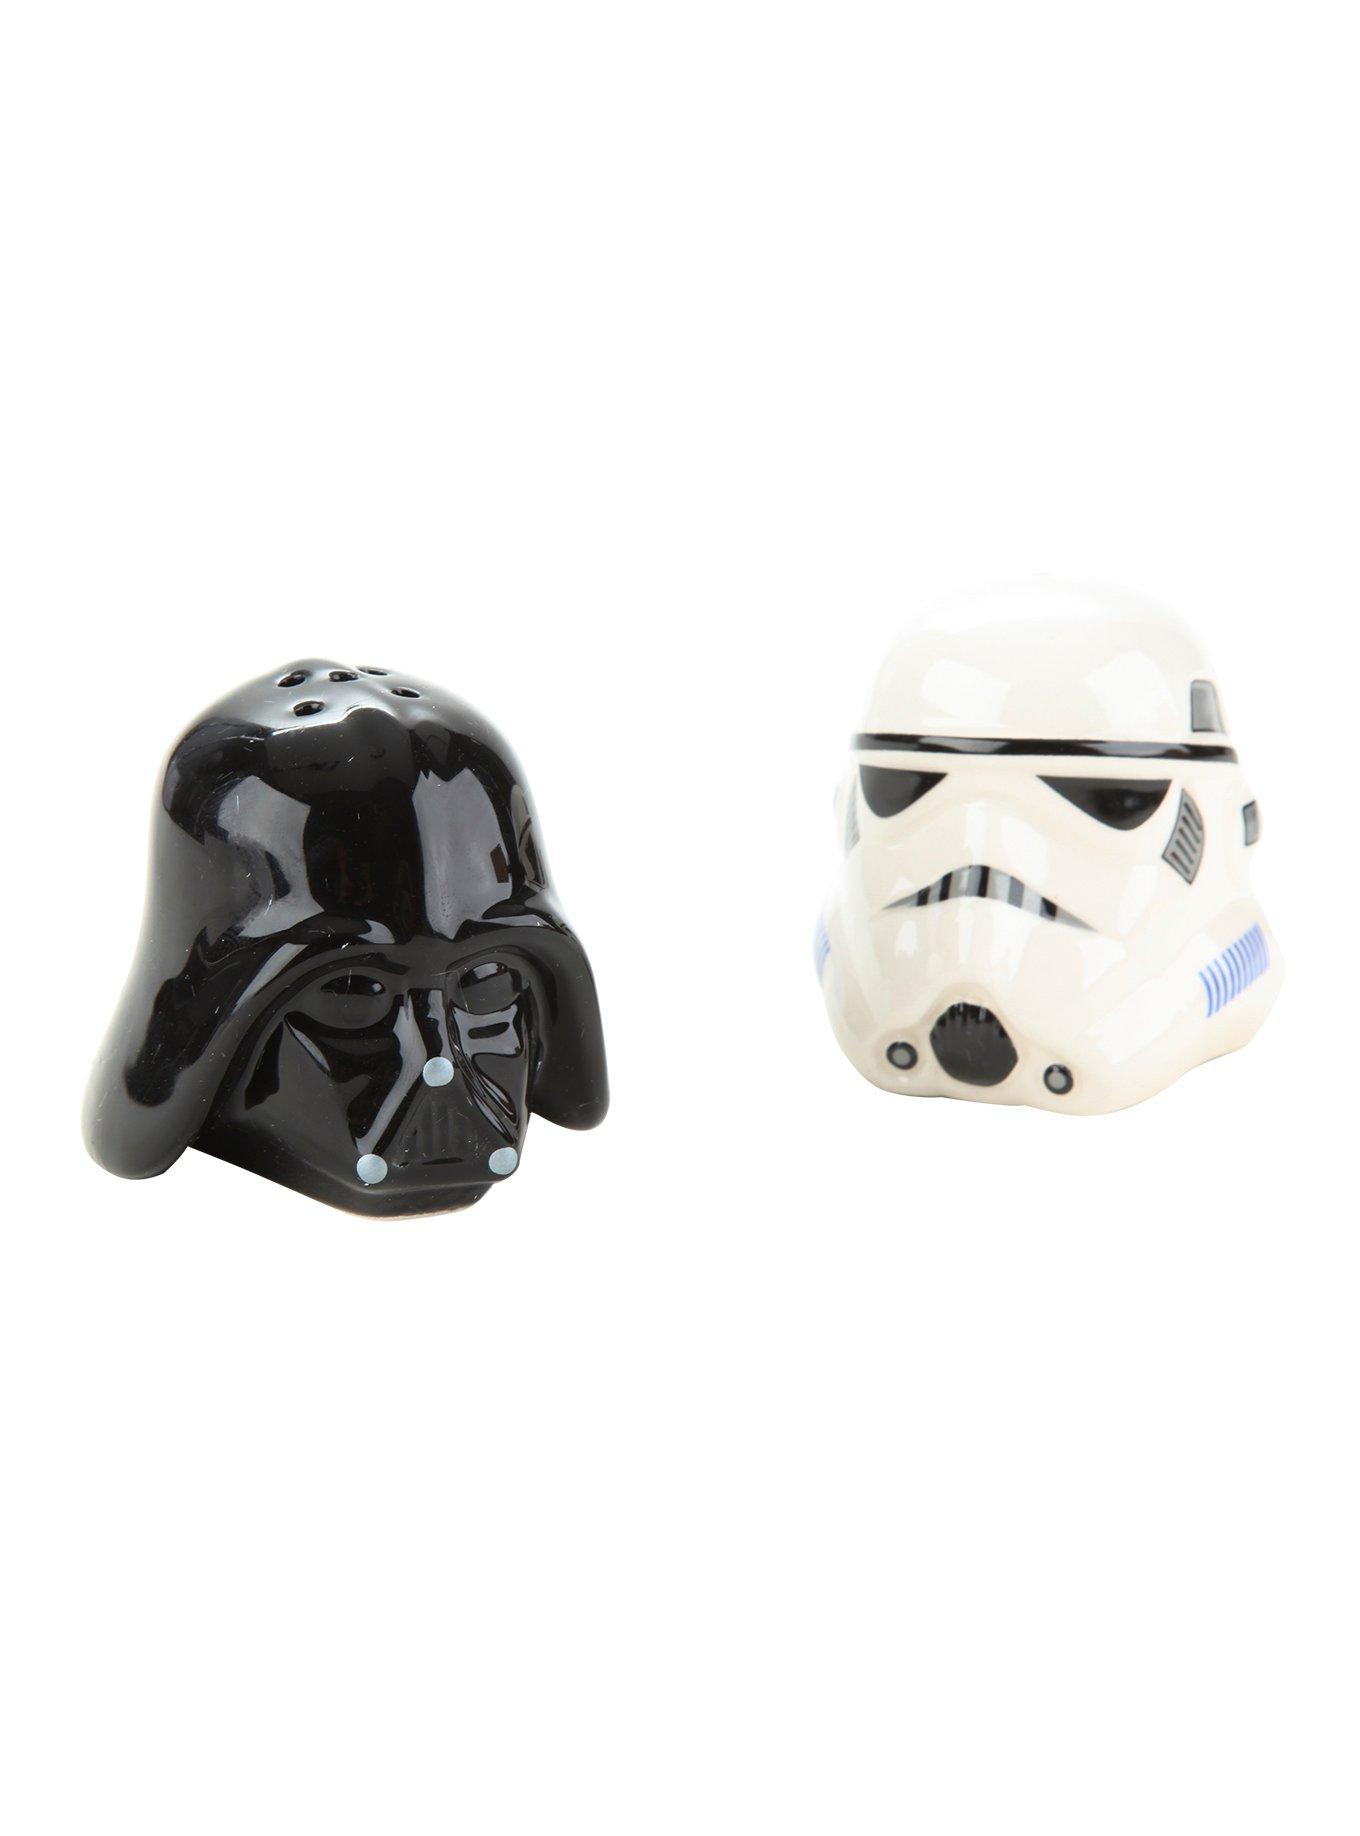 Star Wars: Darth Vader & Stormtrooper Pop! Salt & Pepper Shakers